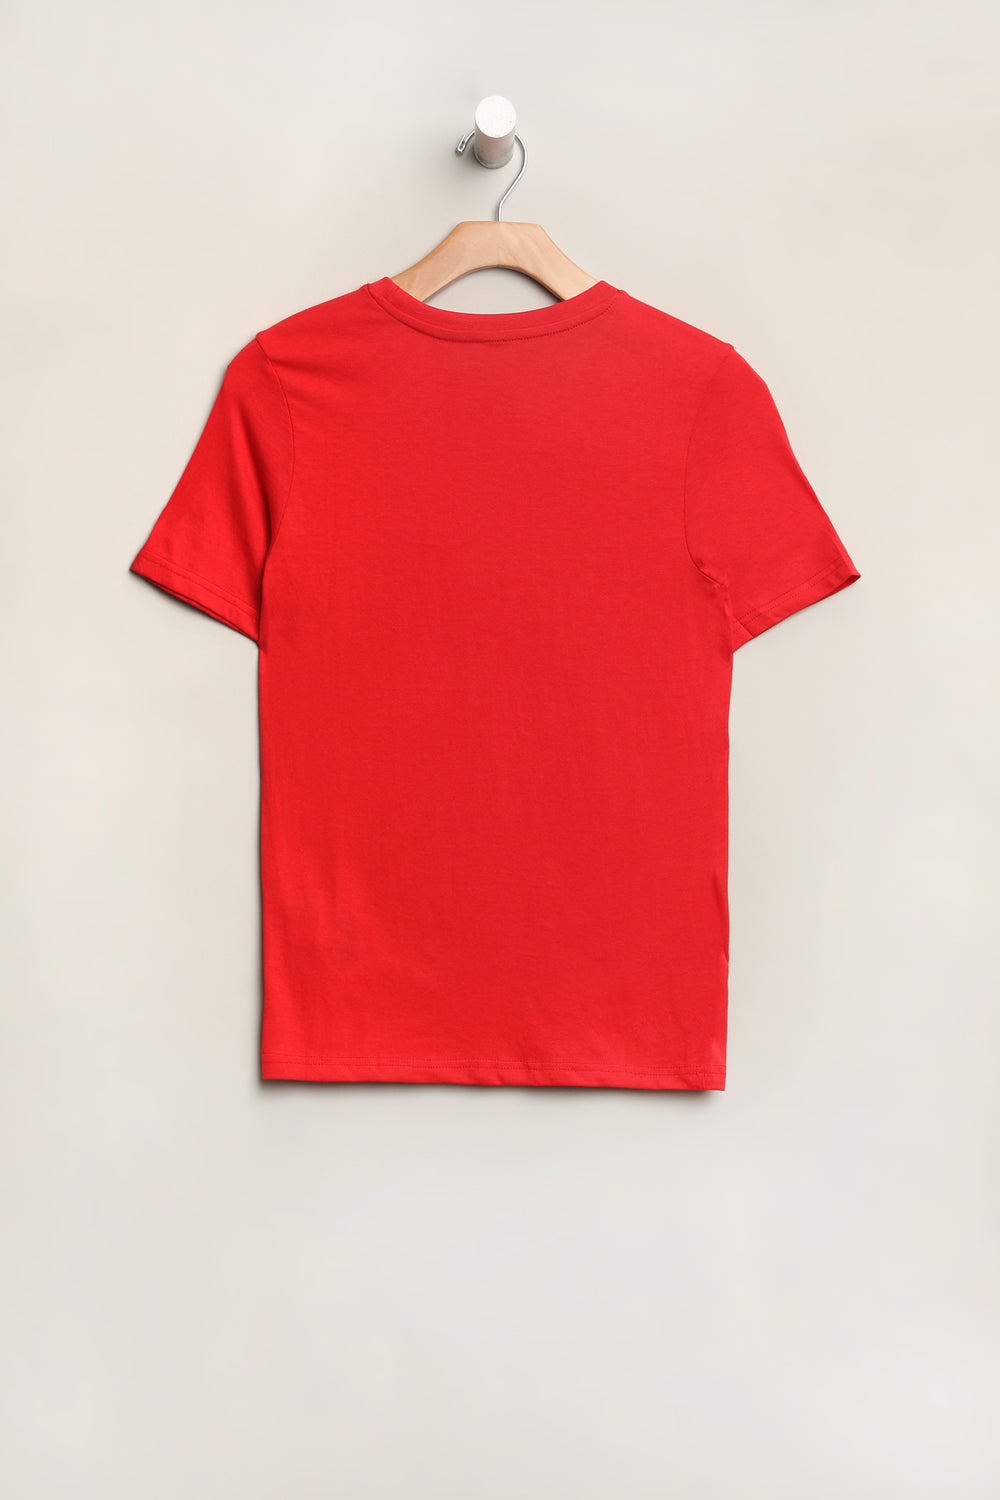 Zoo York Youth Box Logo T-Shirt Red